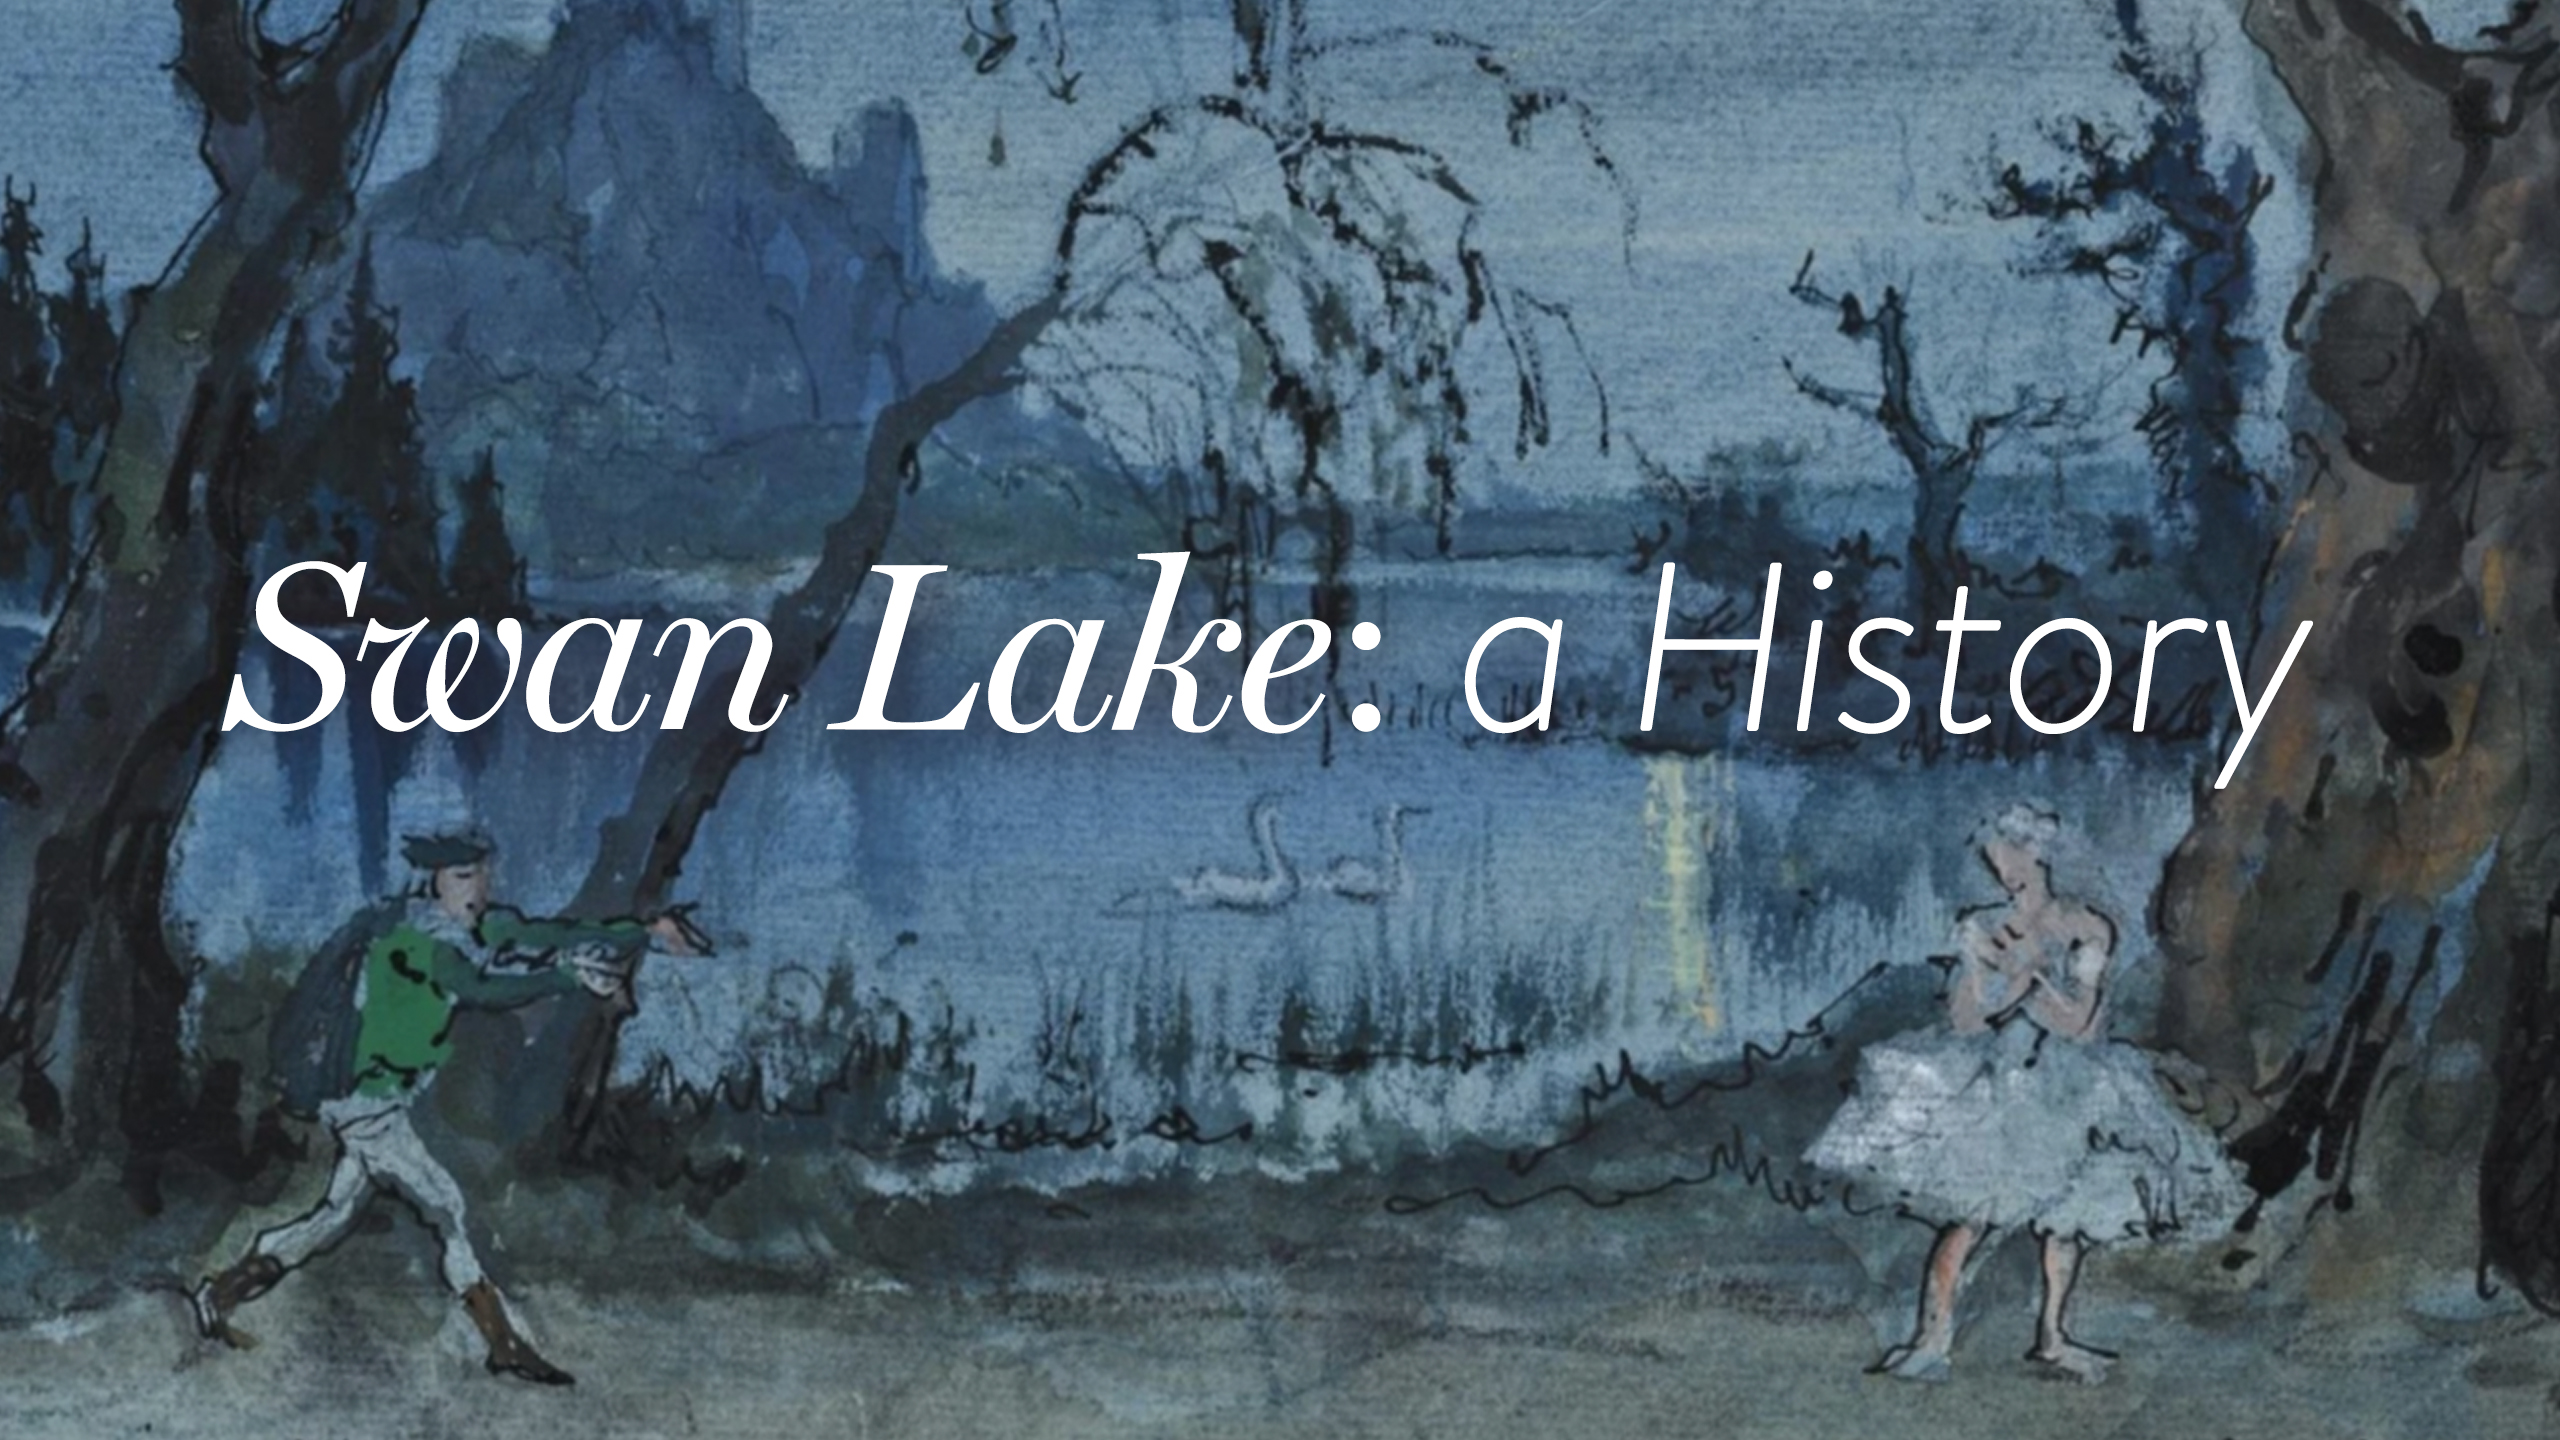 The History of Swan Lake